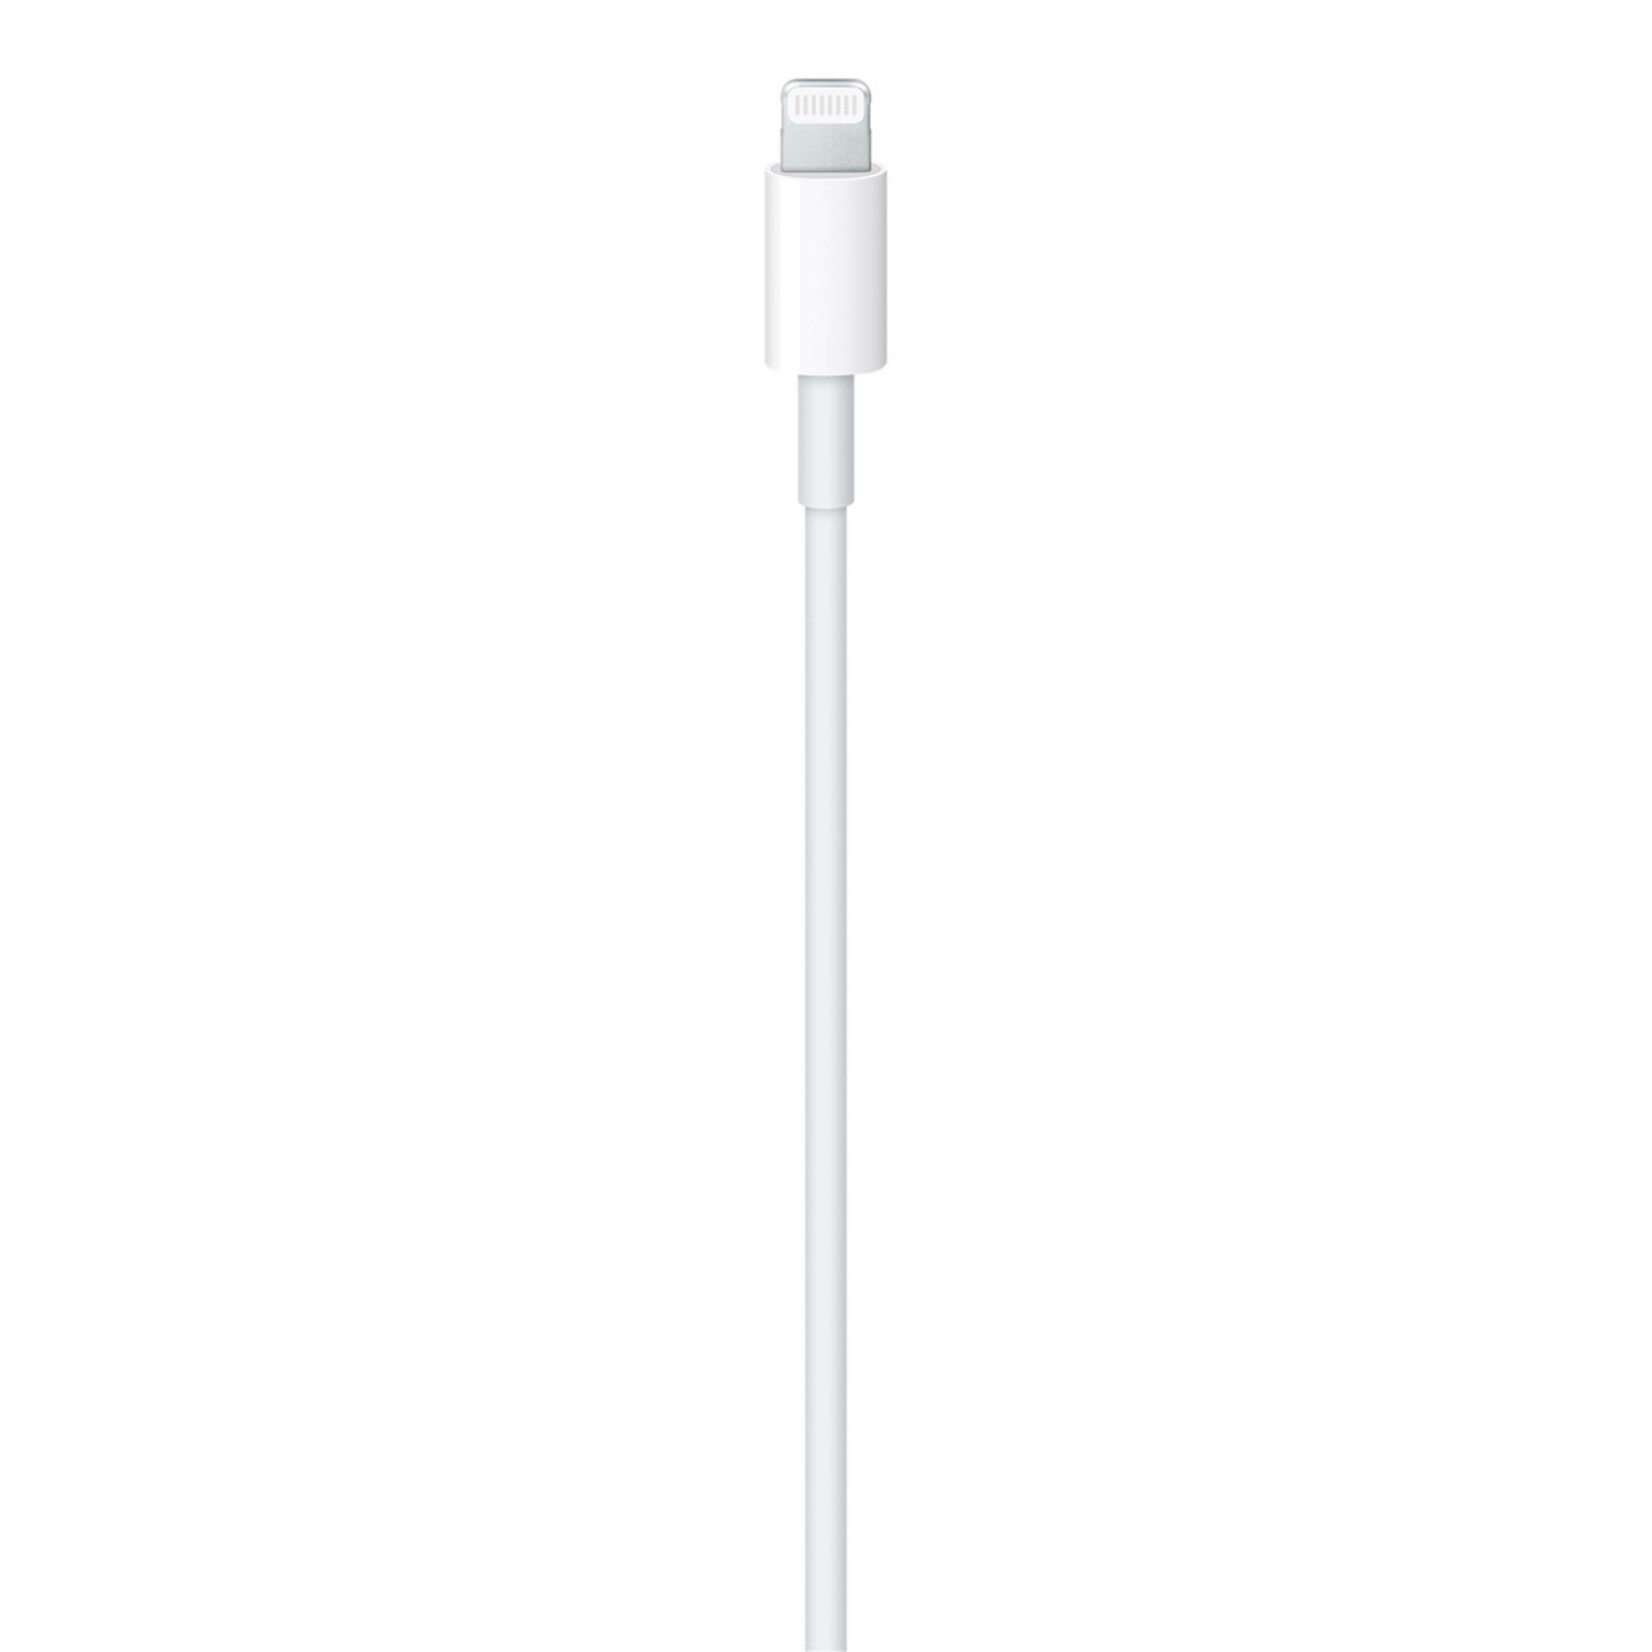 Apple USB-C to Lightning Cable (1 m) : Electronics 